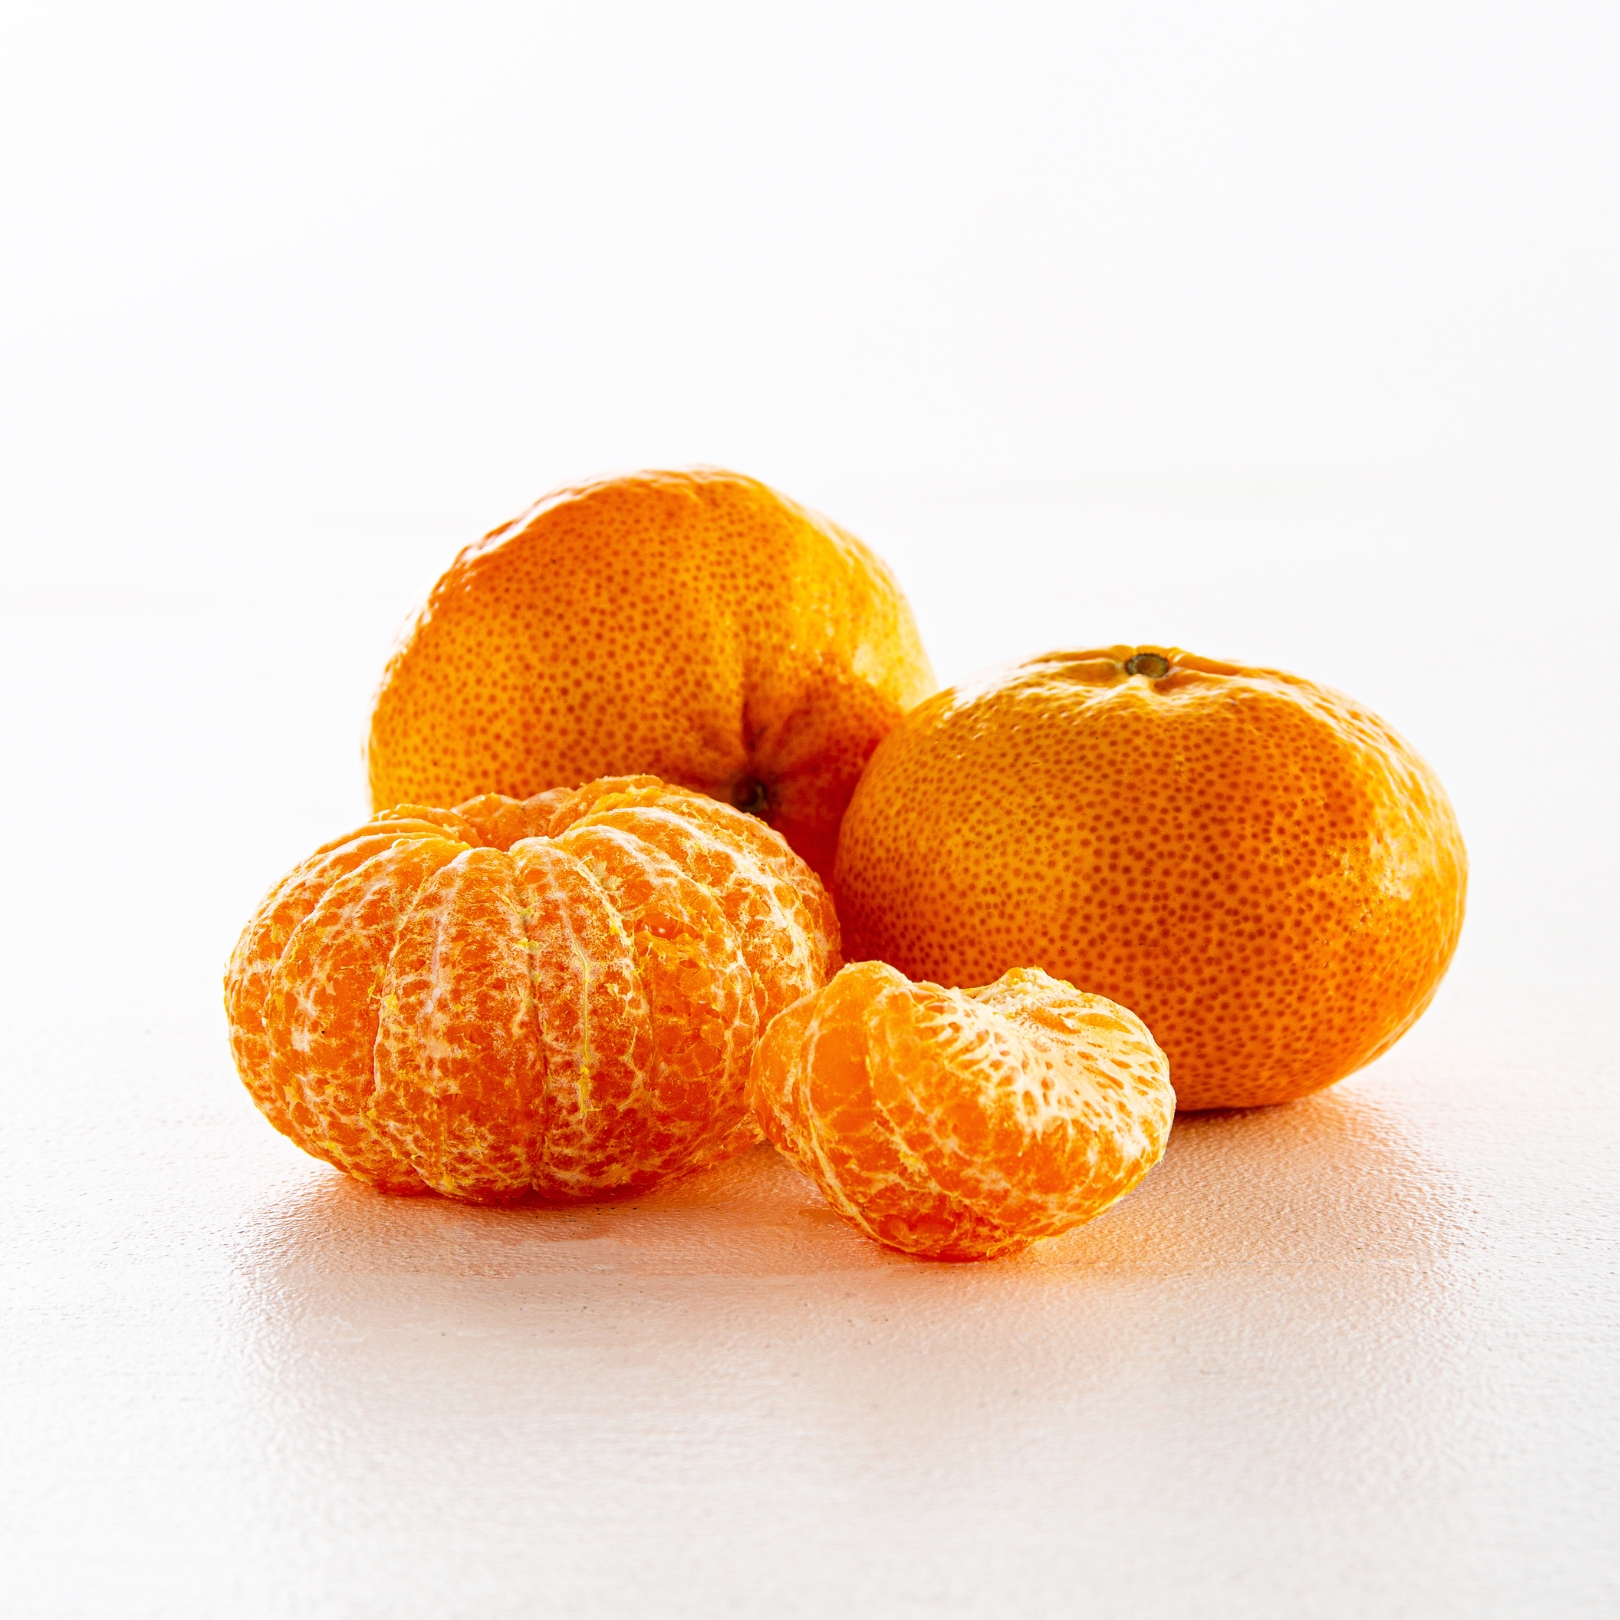 Buy Mandarins - Gold Nugget Online NZ